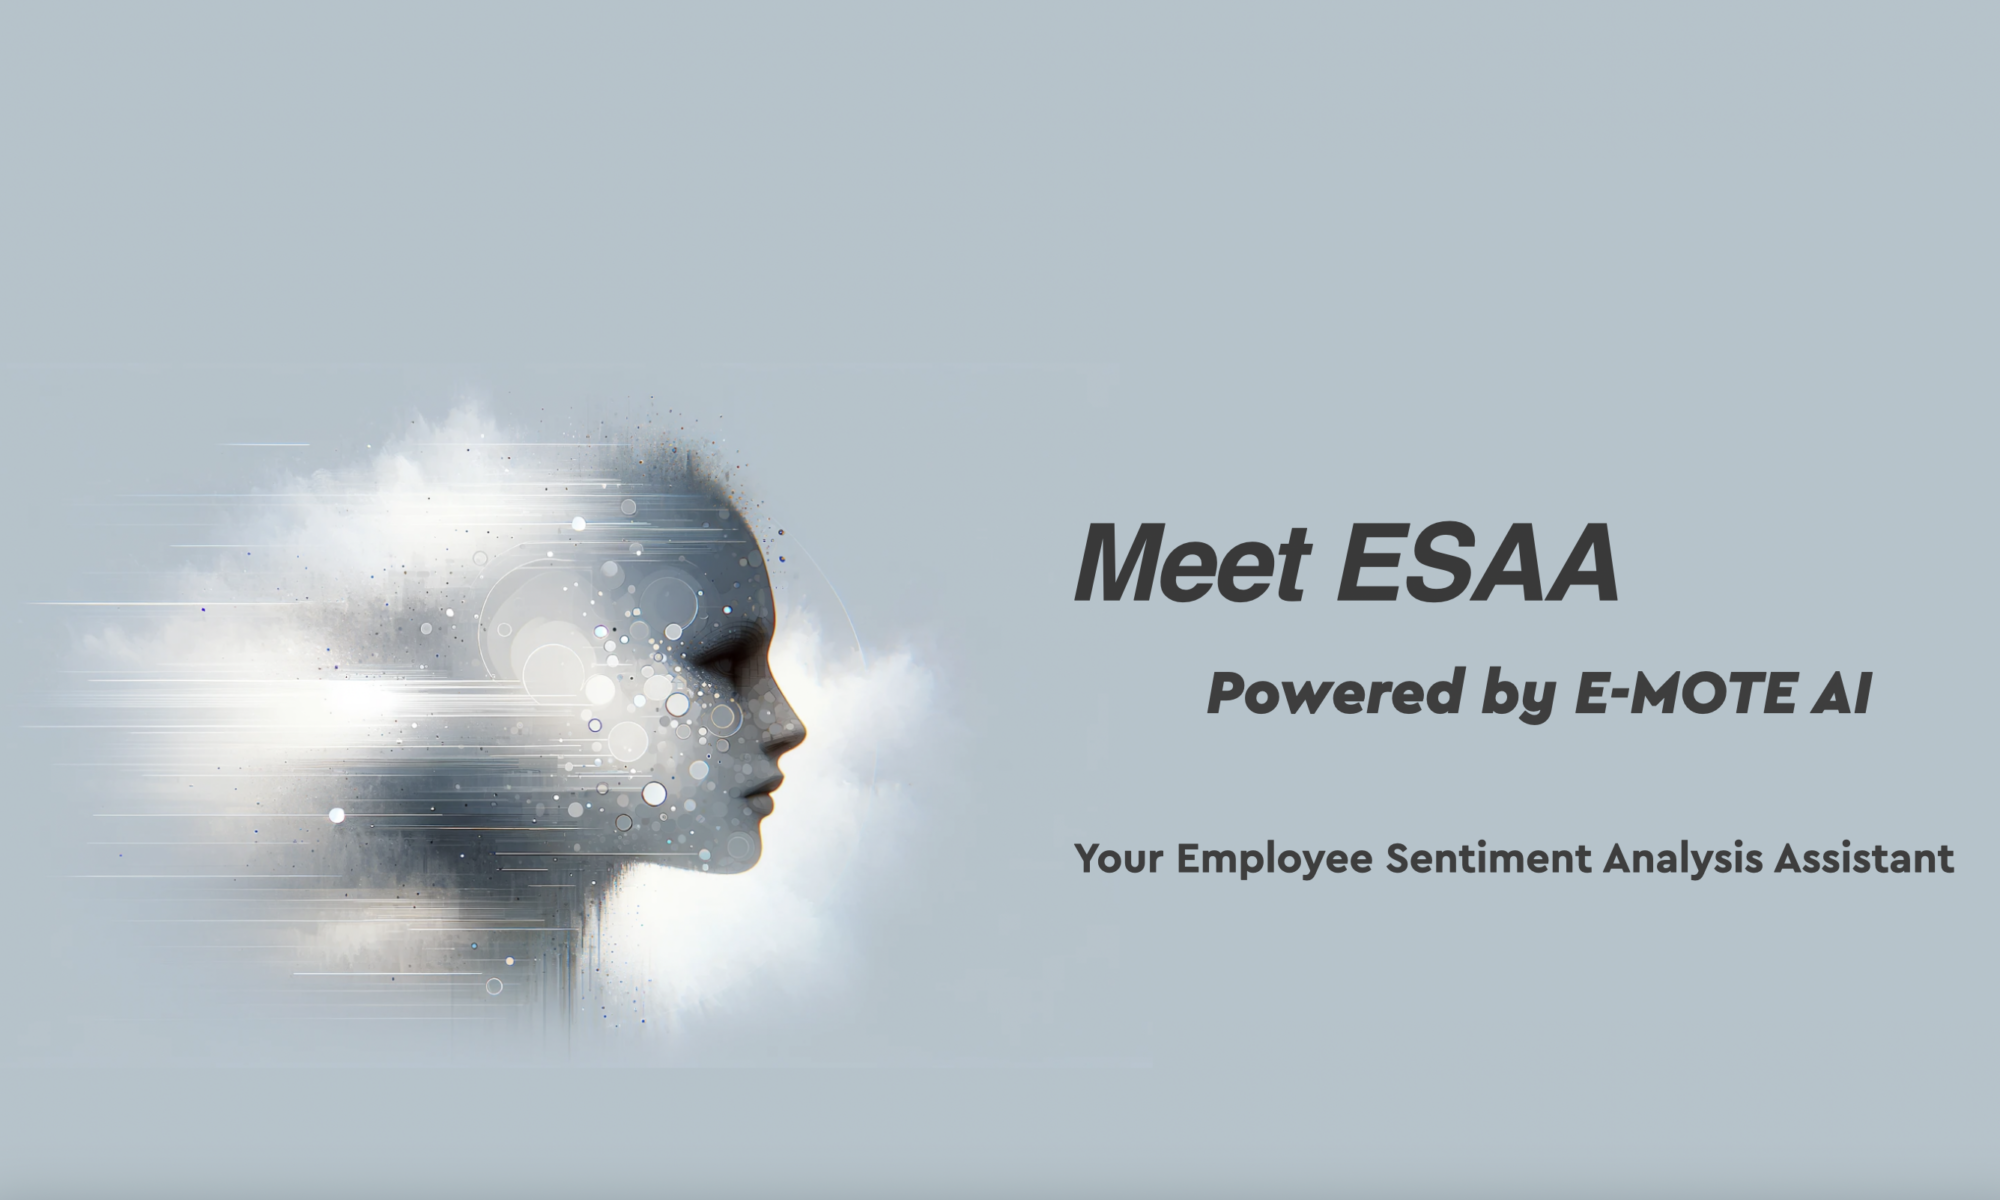 ESAA. Powered by E-Mote AI